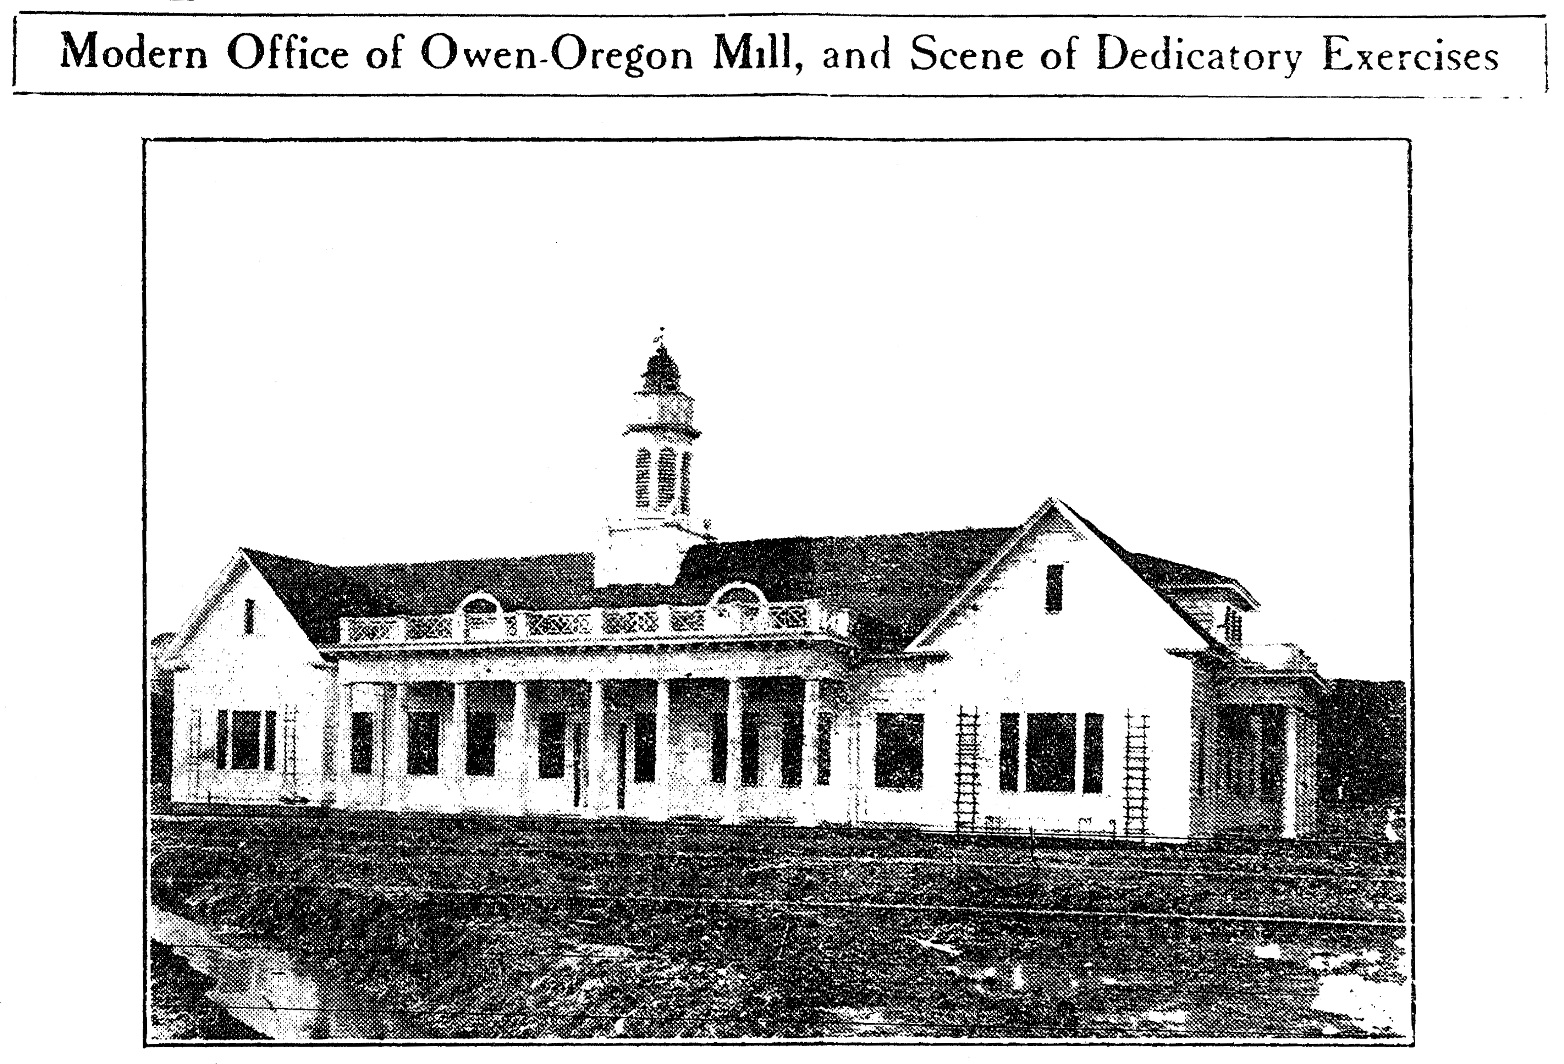 Owen-Oregon Headquarters, April 21, 1927 Medford Mail Tribune